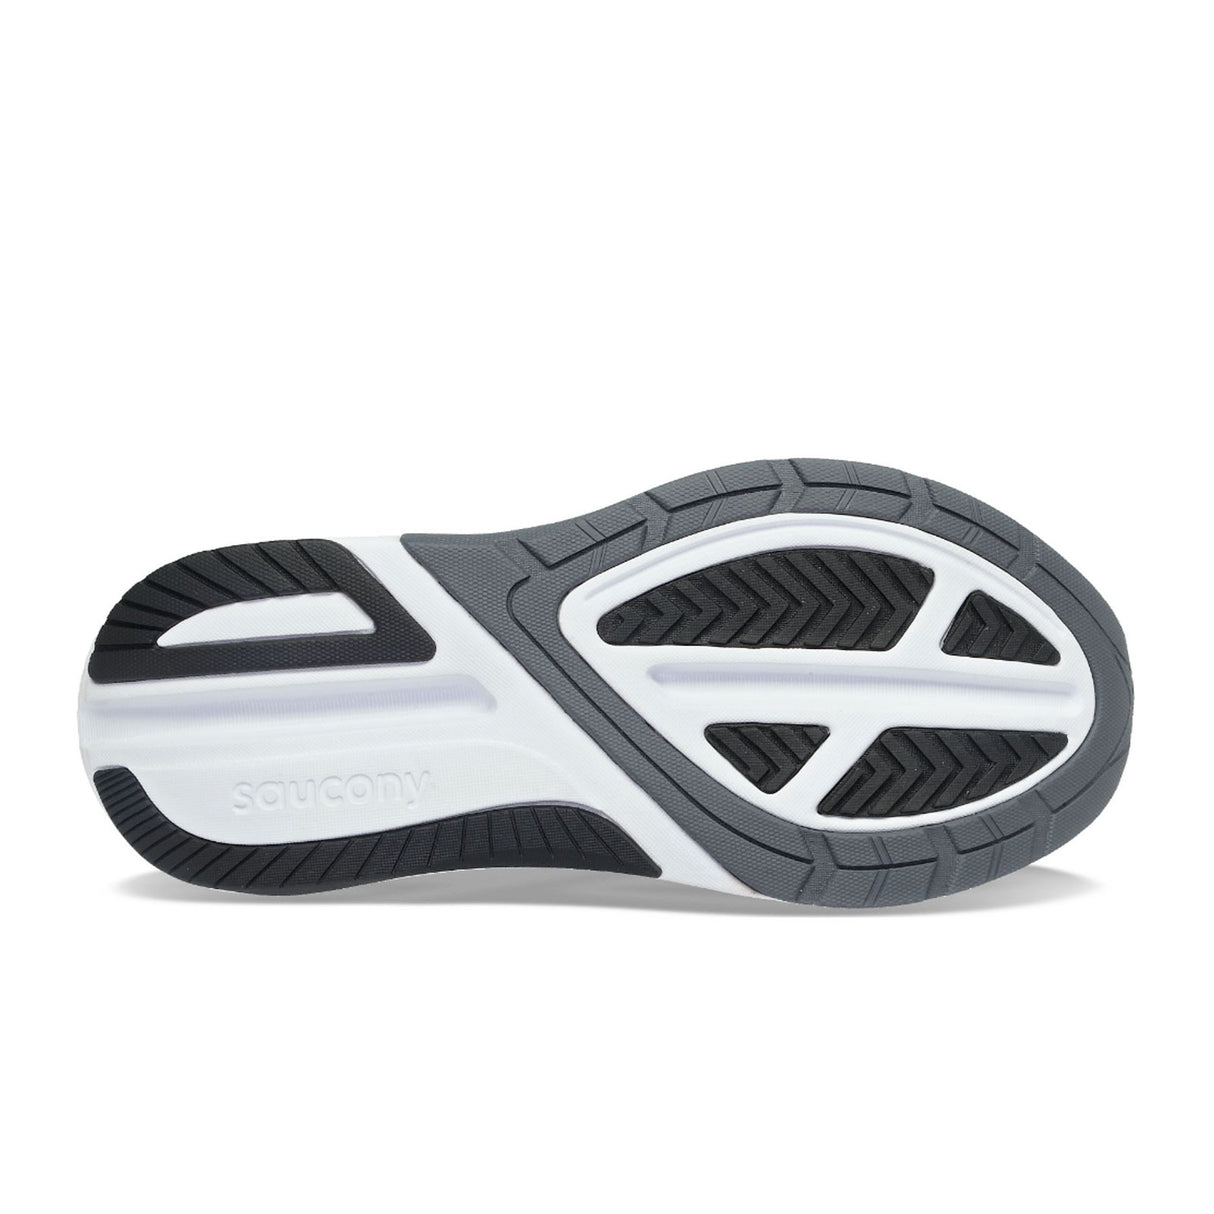 Saucony Echelon 9 Extra Wide Running Shoe (Men) - Black/White Athletic - Running - The Heel Shoe Fitters